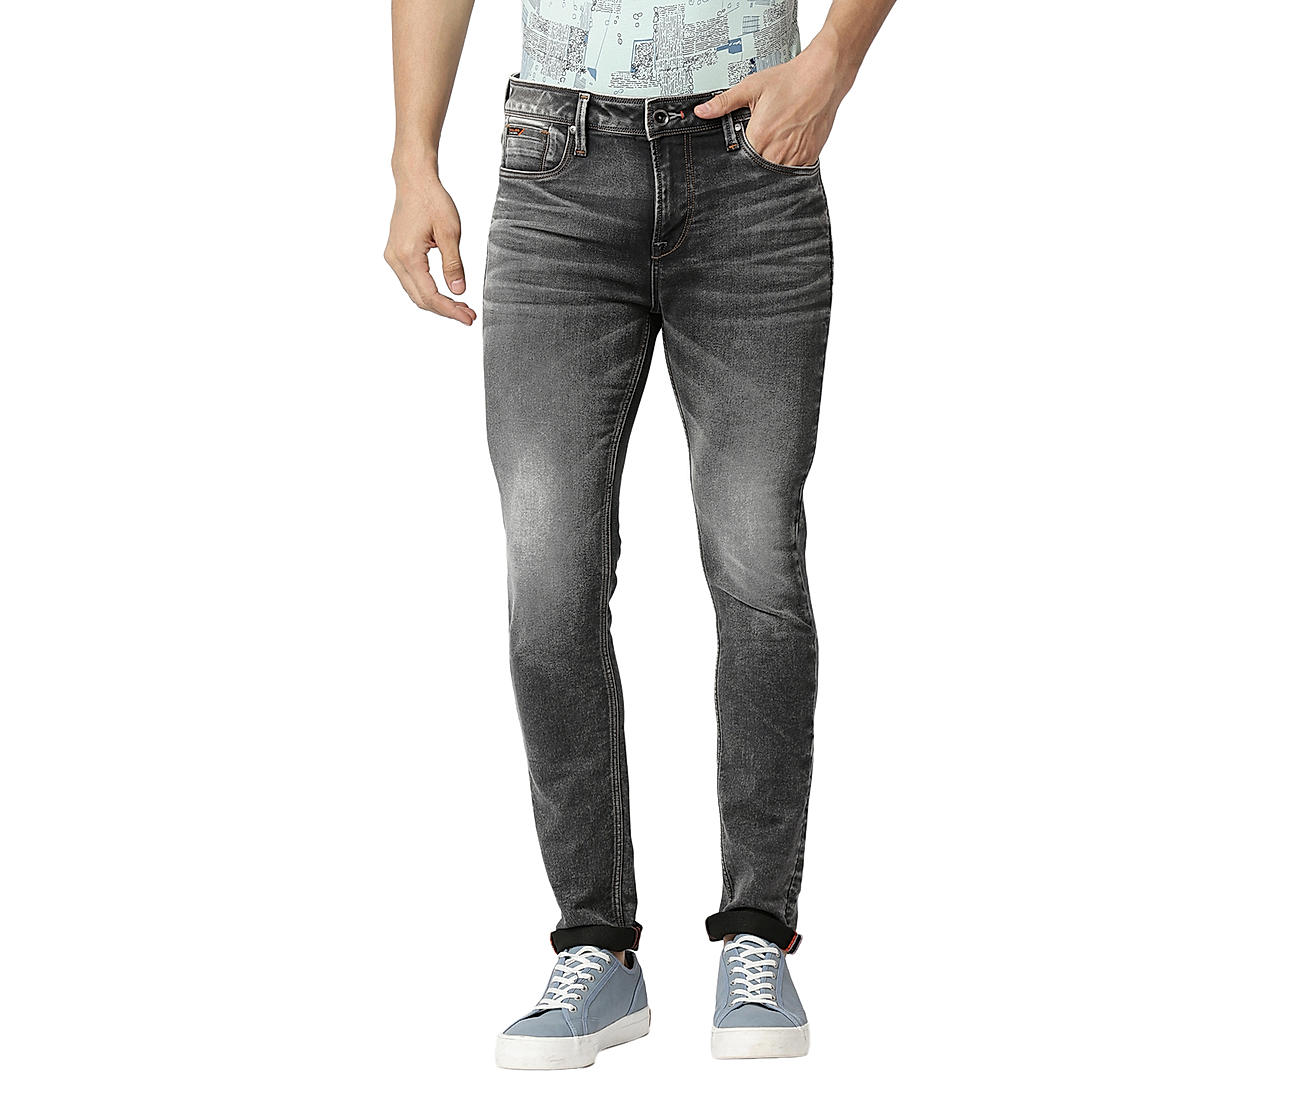 Buy killer jeans pant for man regular fit in India @ Limeroad